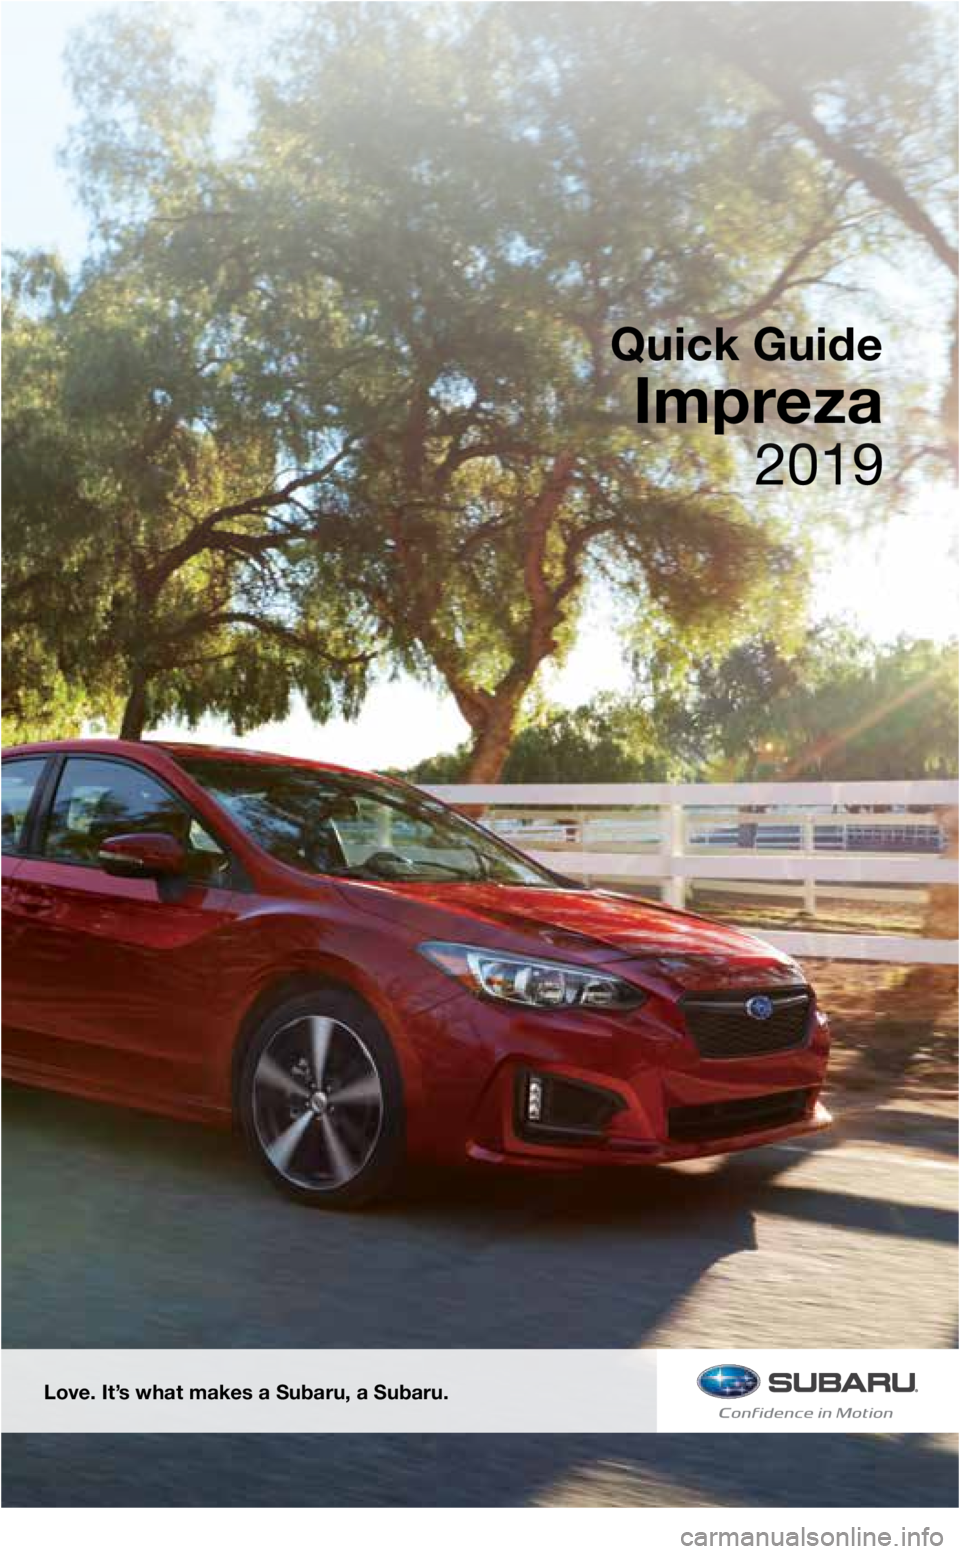 SUBARU IMPREZA 2019  Quick Guide 2019
Love. It’s what makes a Subaru, a Subaru.
Quick Guide
Impreza
3641428_19b_Impreza_QRG_072518.indd   27/25/18   11:16 AM      